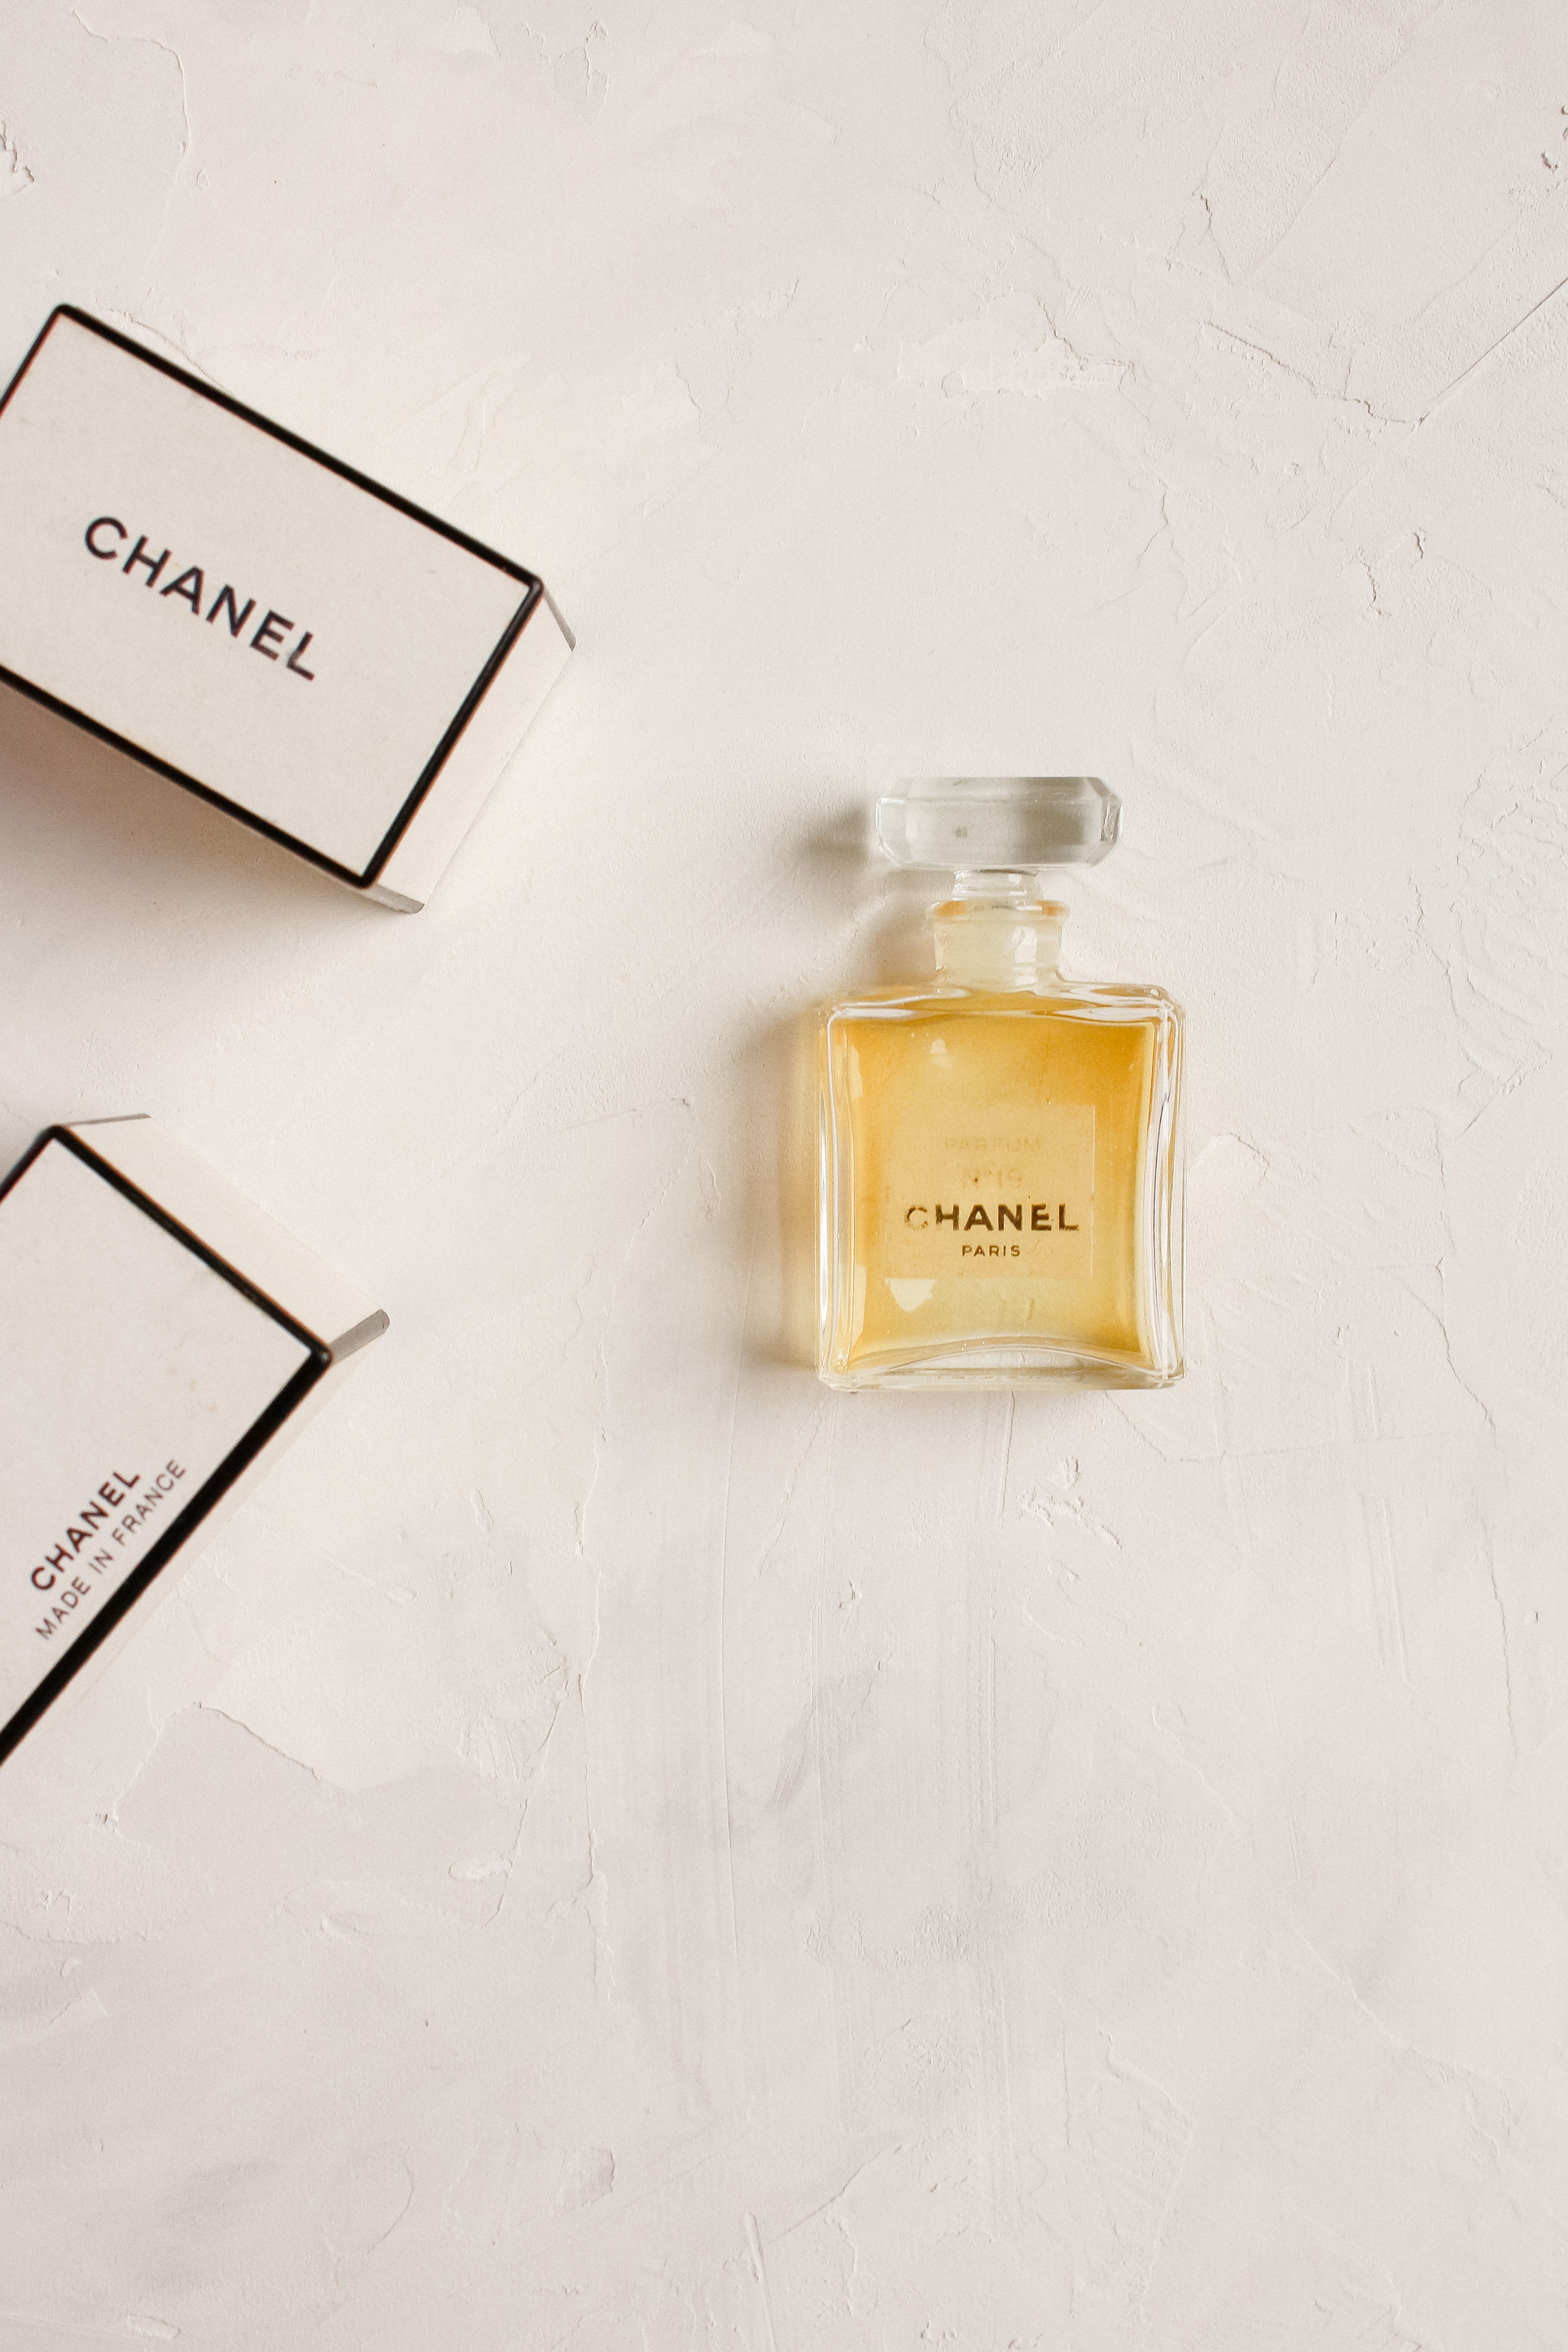 perfume chanel no 19